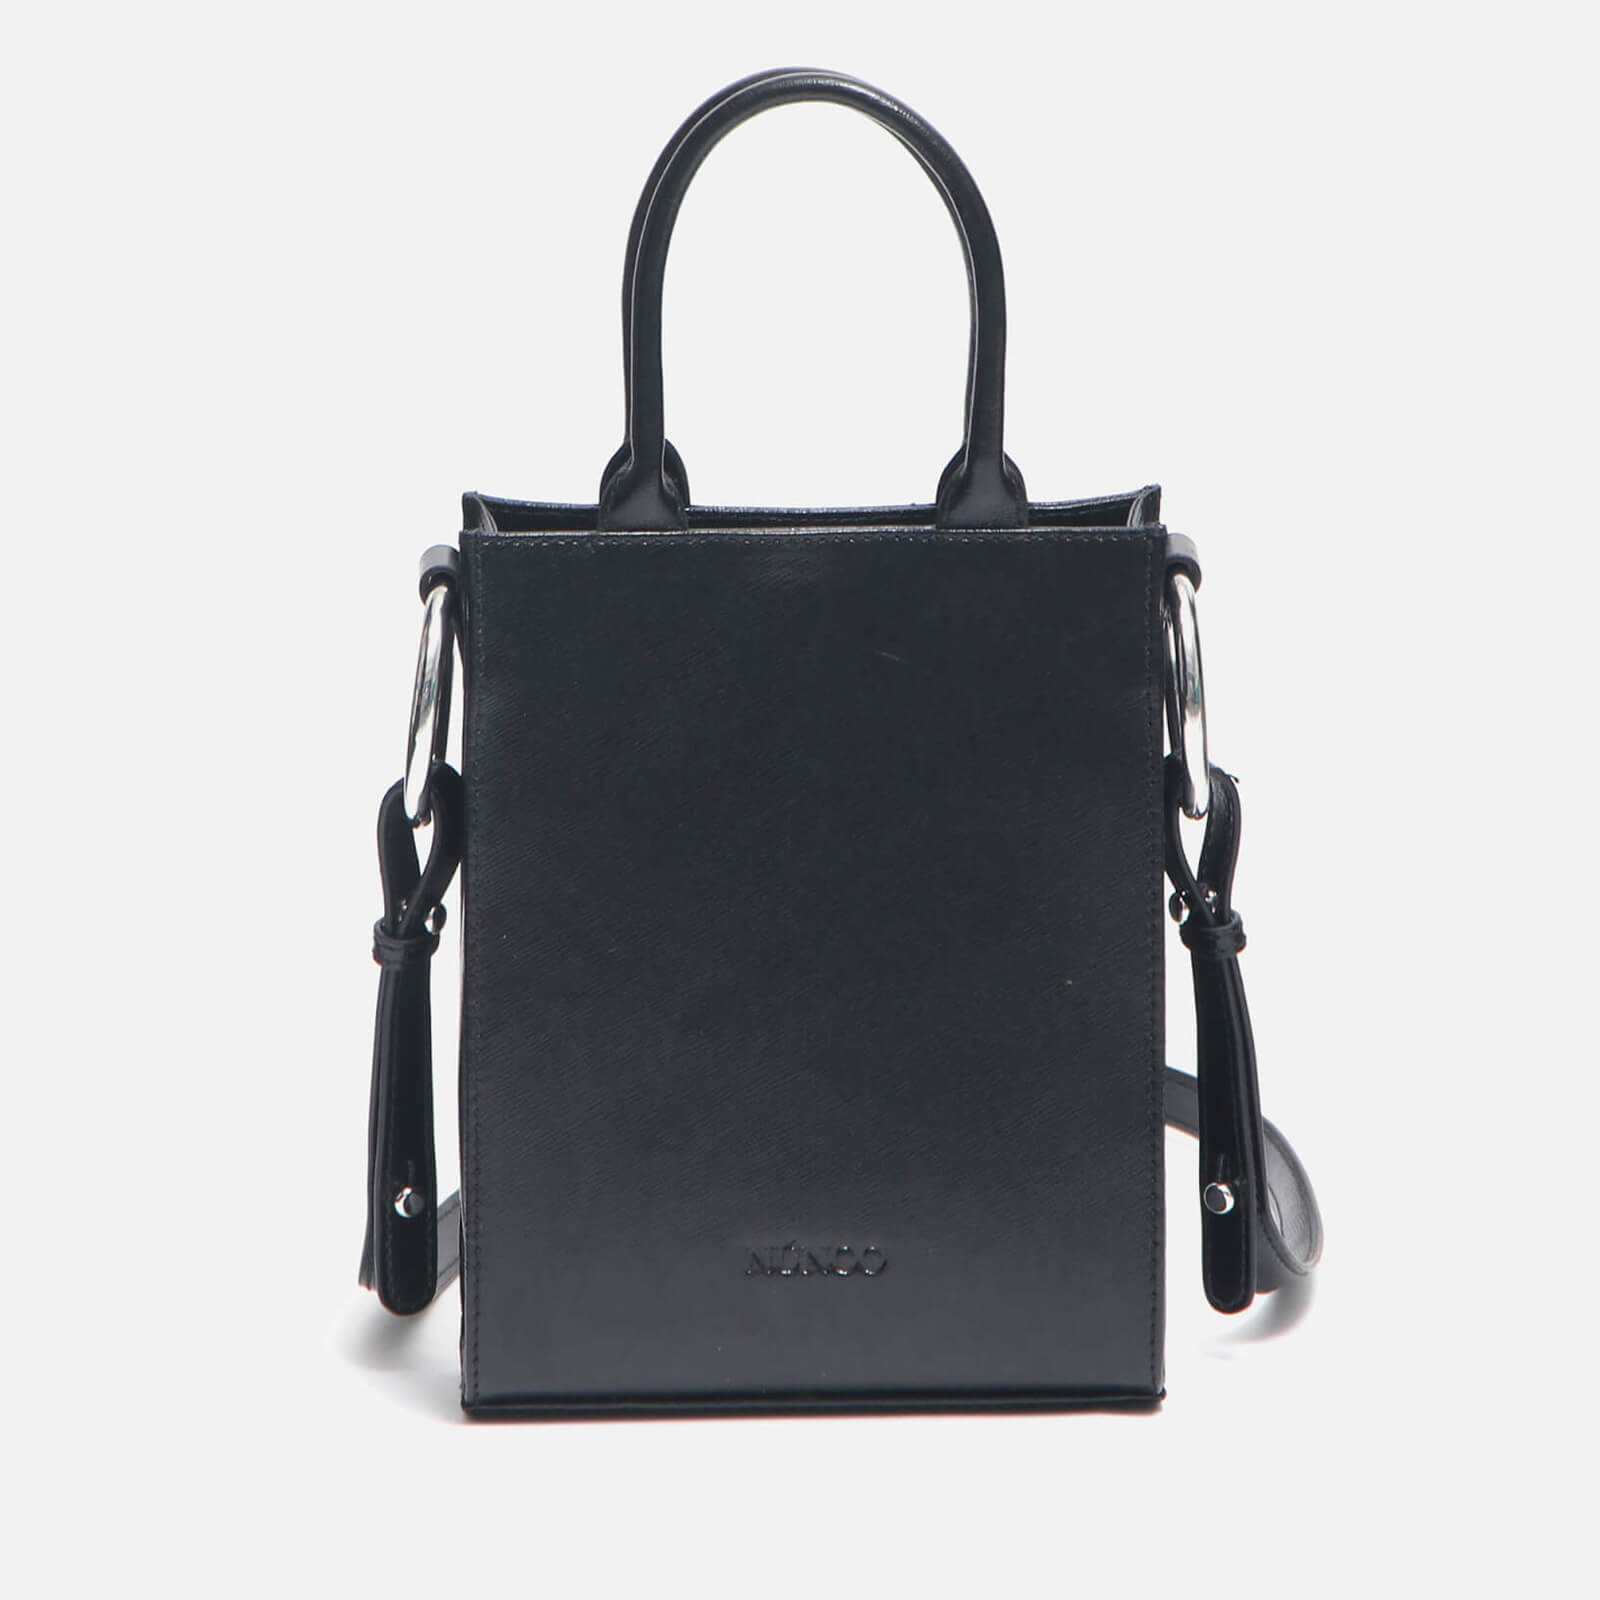 Nunoo Women's Florence Moonbag Mini Tote Bag - Black